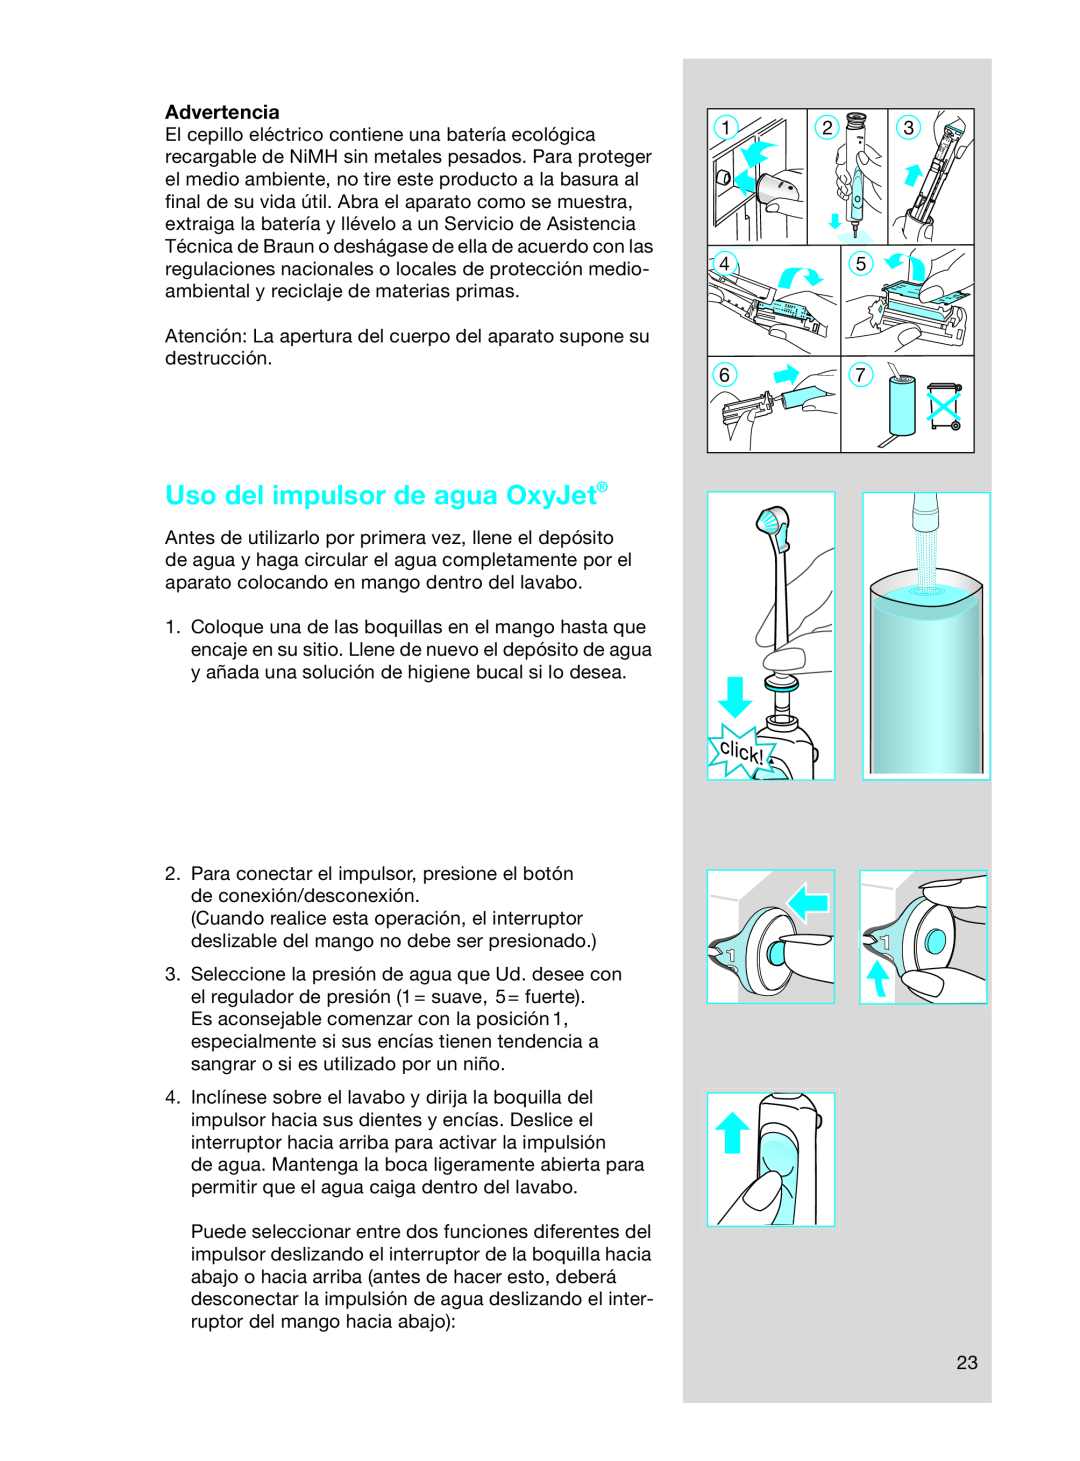 Braun OC17525, OC 17545X manual Uso del impulsor de agua OxyJet, Advertencia 